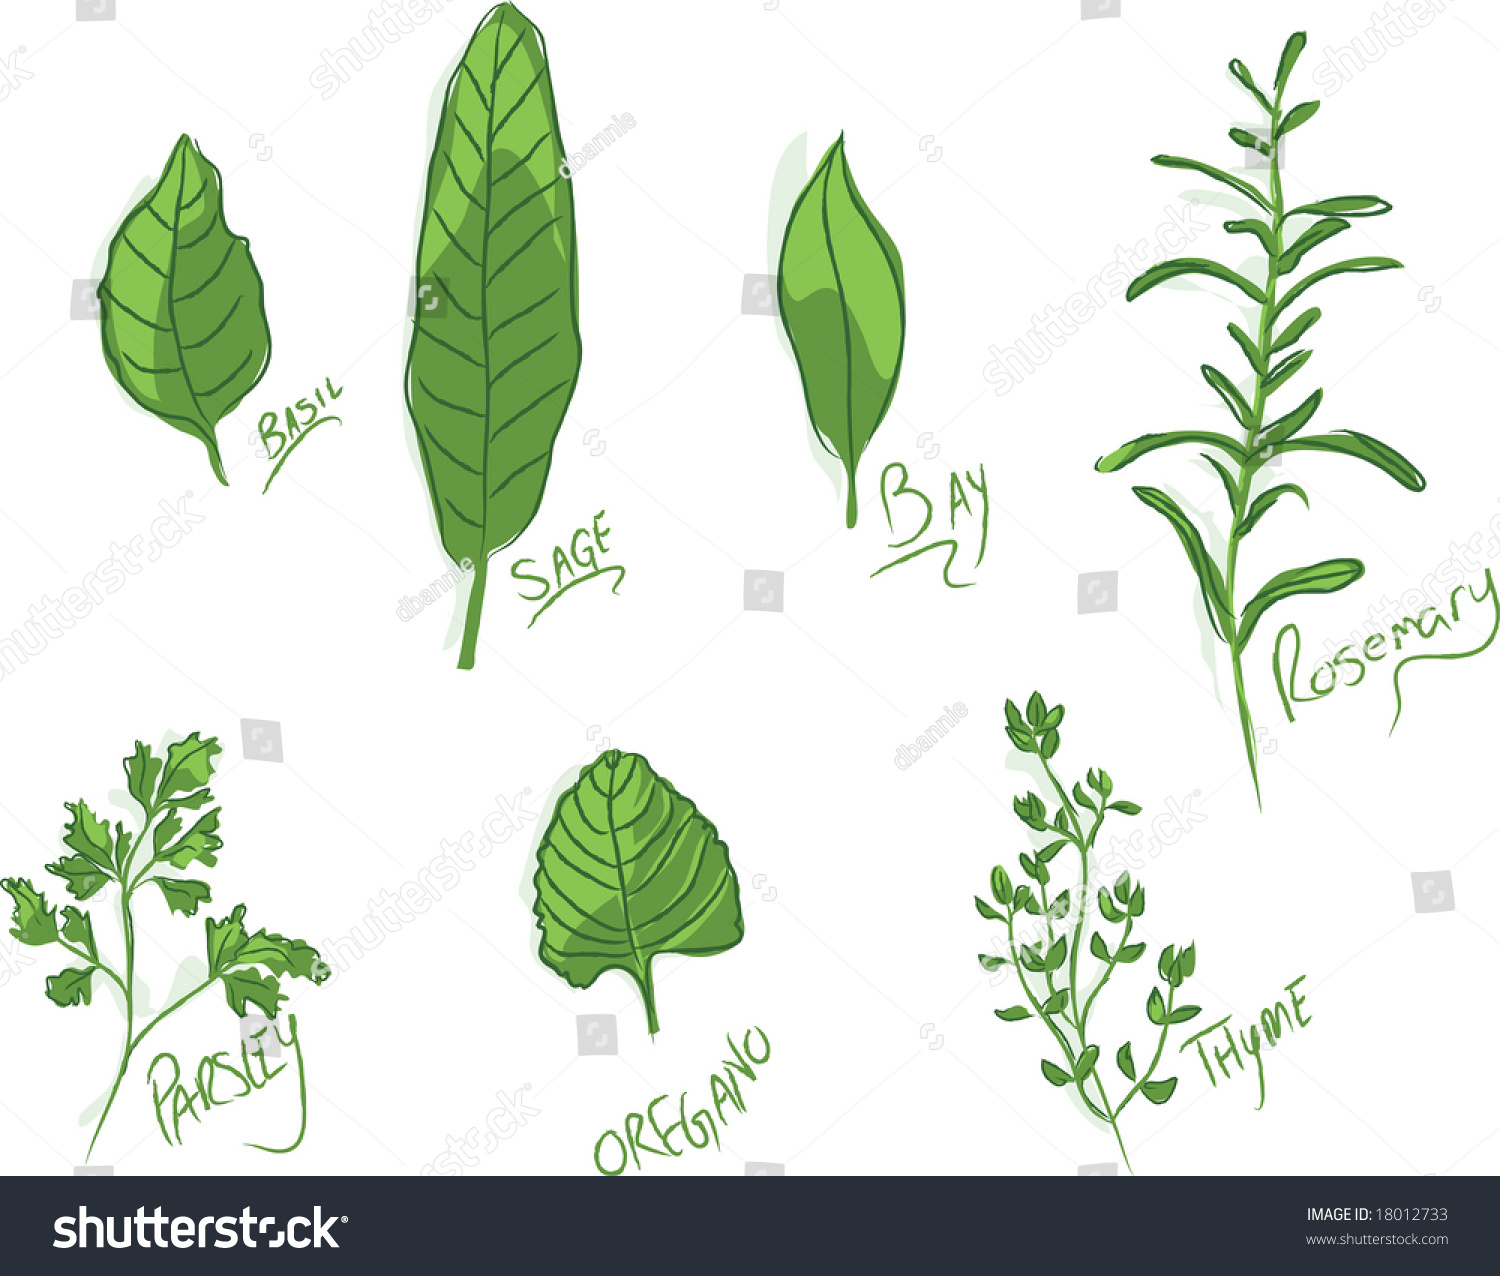 Group Handillustrated Culinary Herbs Names Stock Vector 18012733 ...